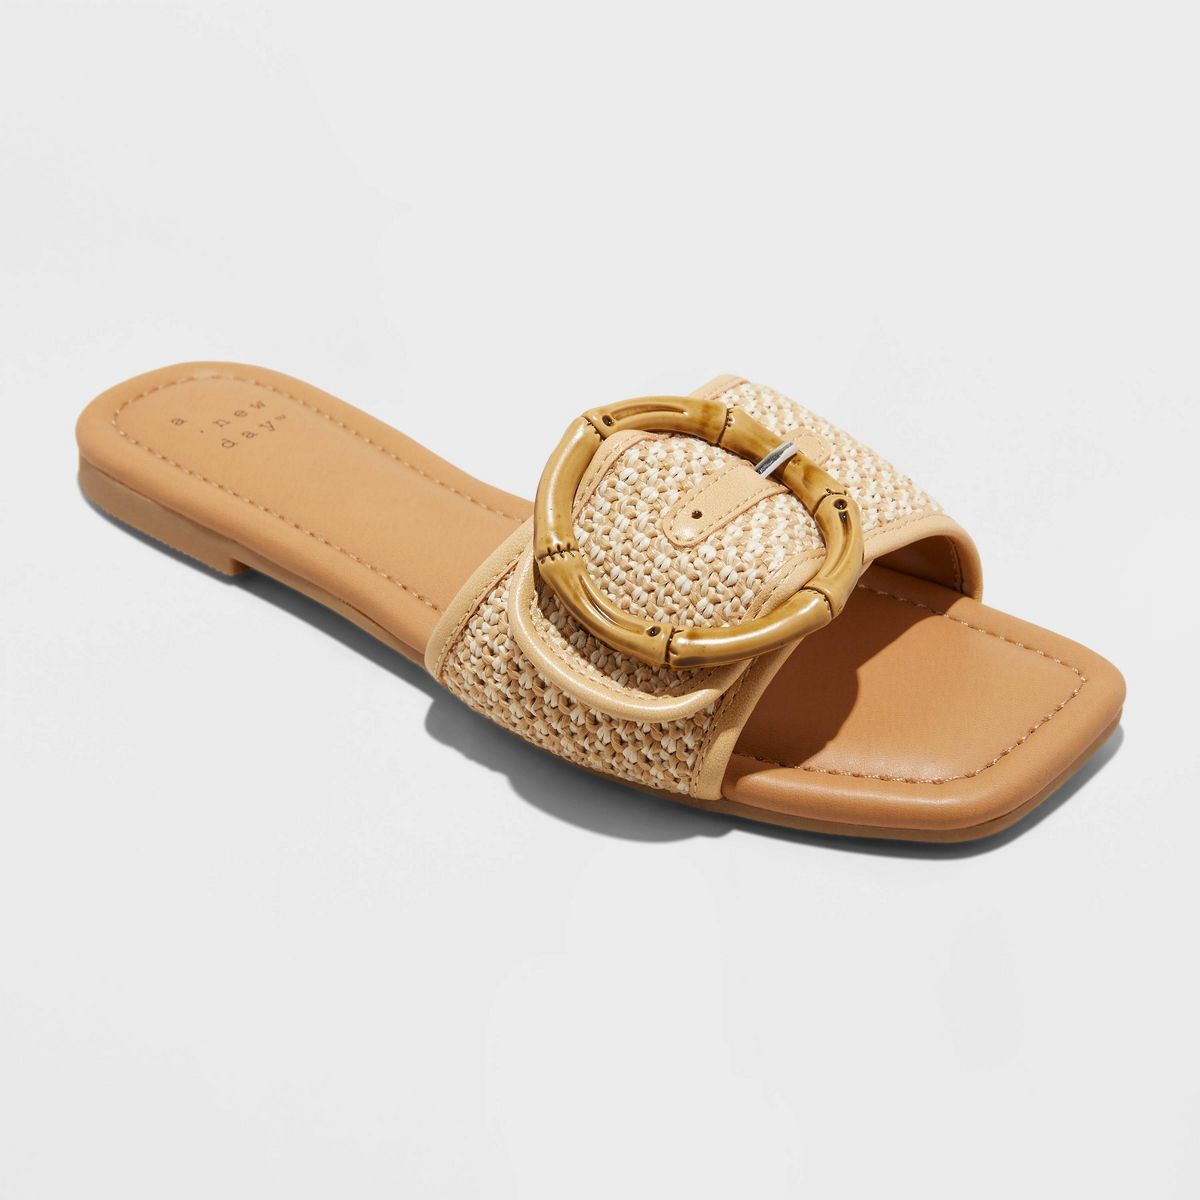 Women's Bennie Buckle Slide Sandals with Memory Foam Insole - A New Day™ Beige 7.5 | Target